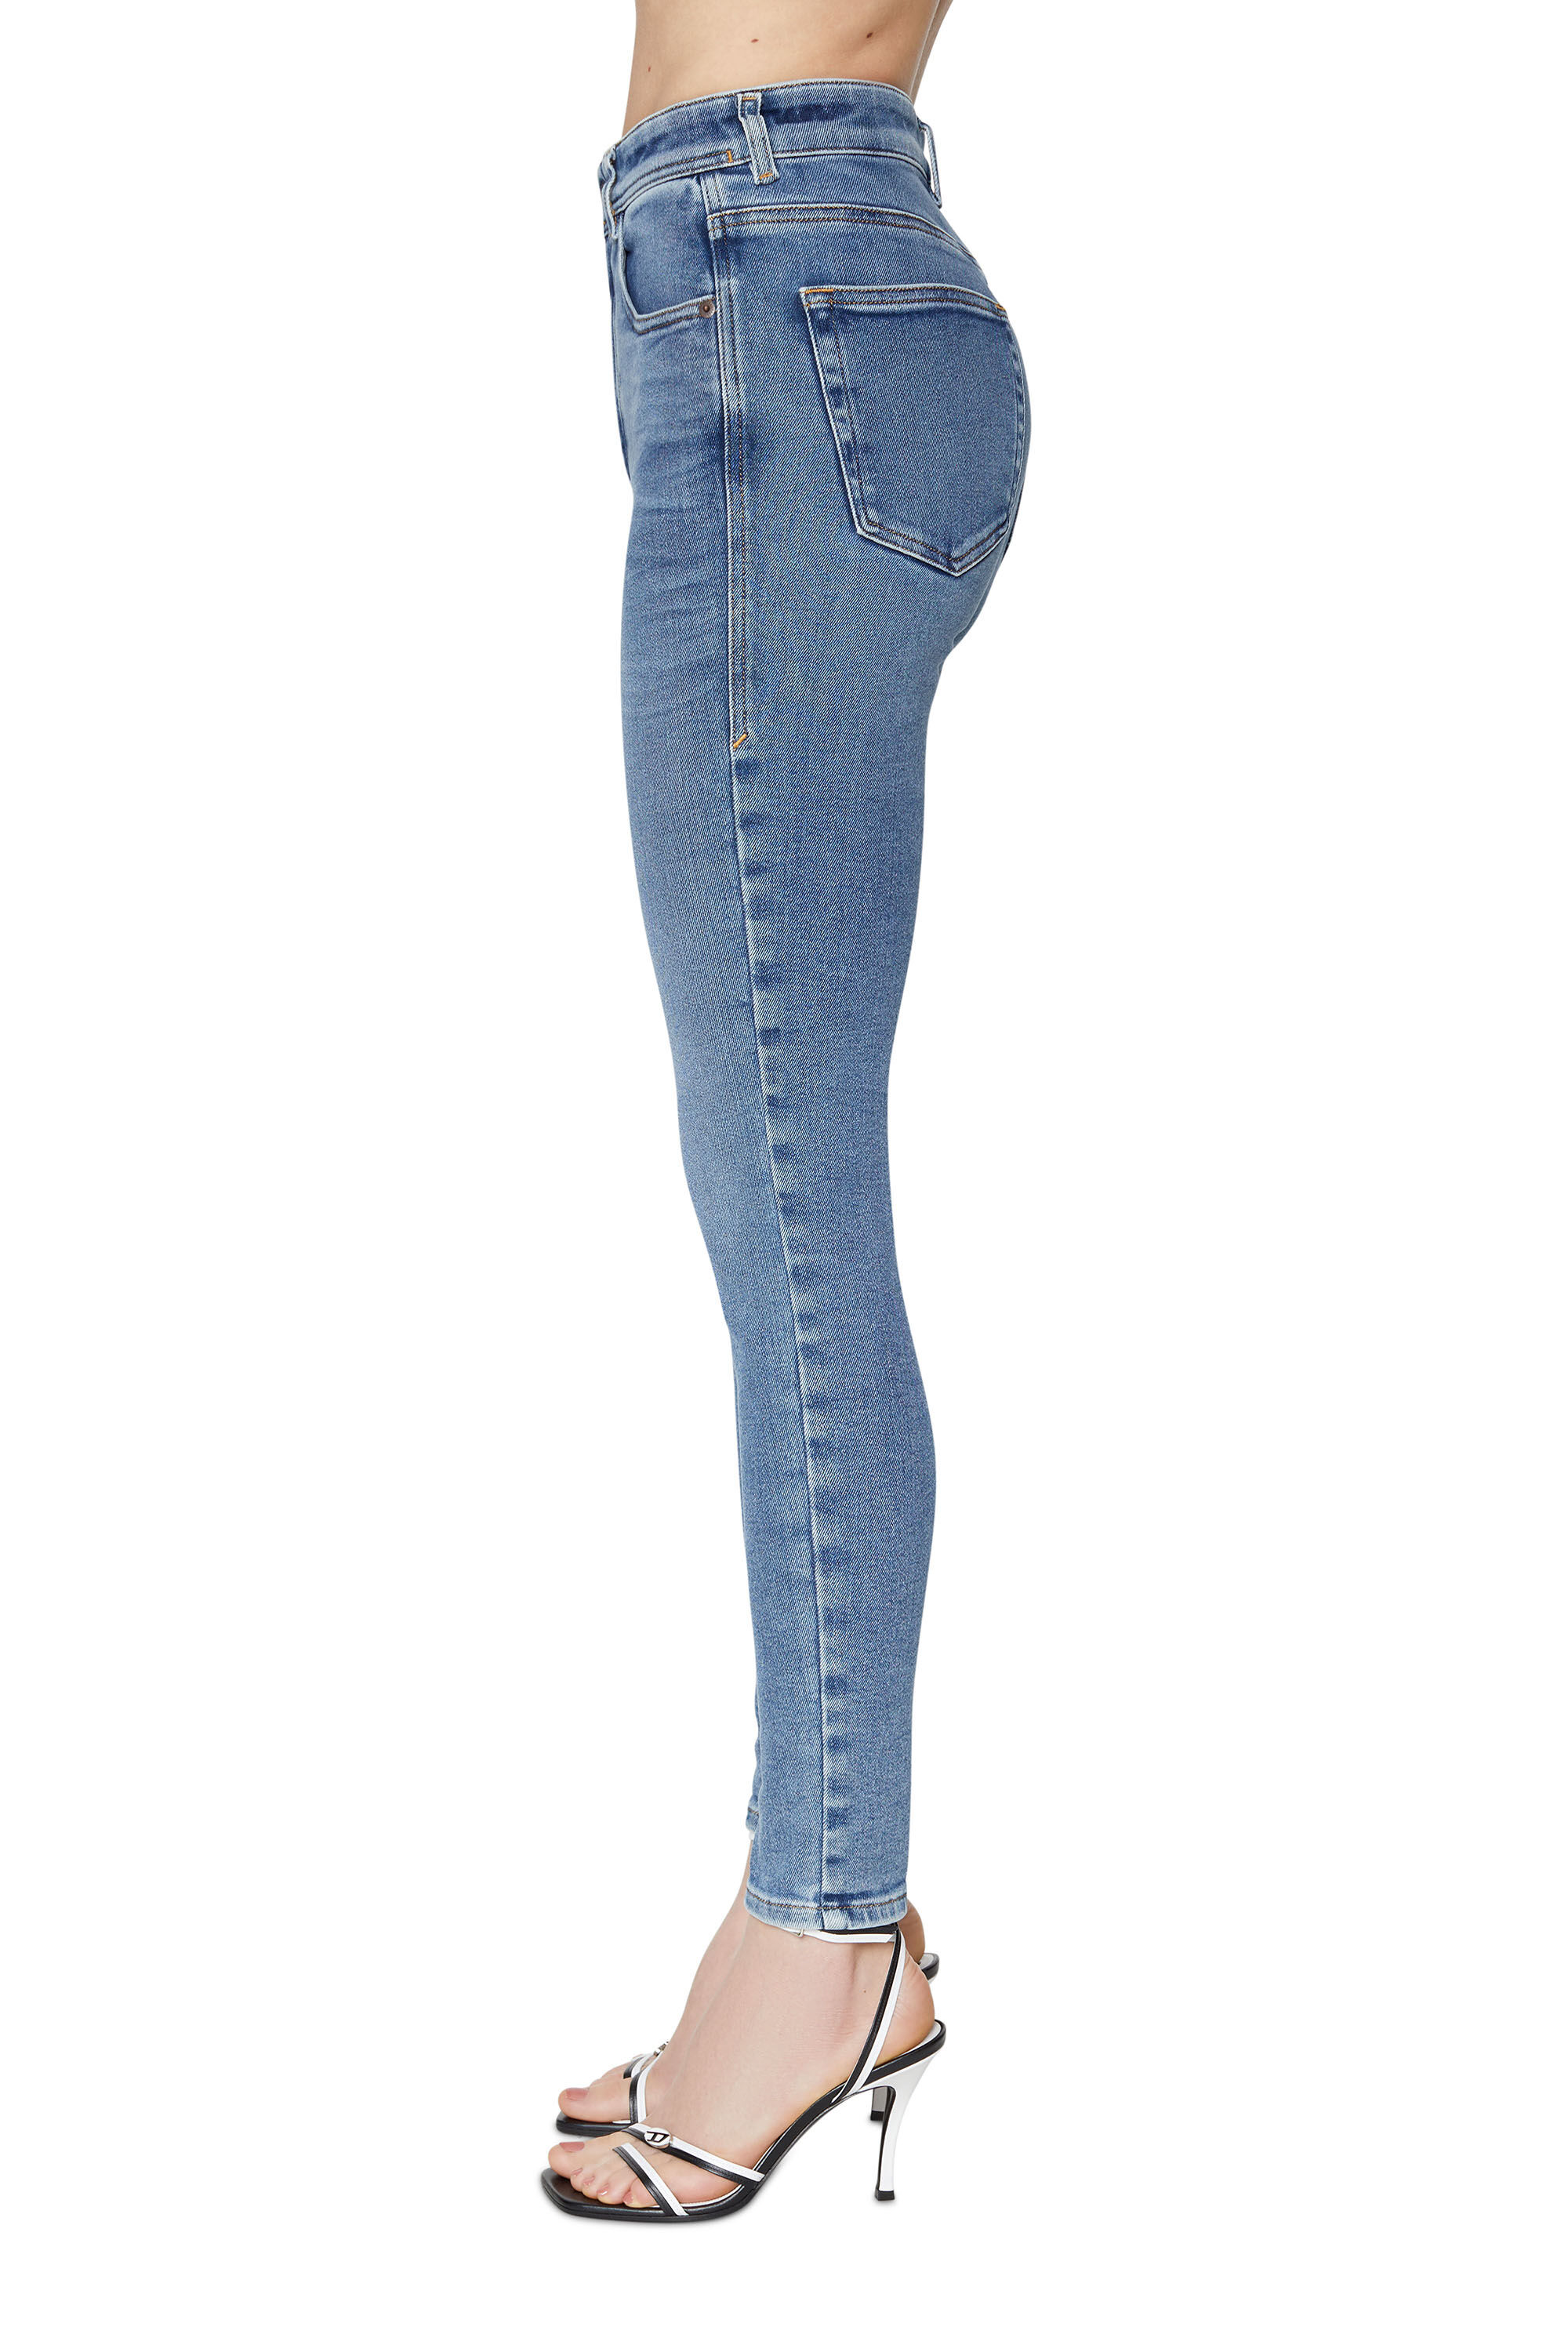 1984 Slandy high 09D62 Woman: Super skinny Medium blue Jeans | Diesel